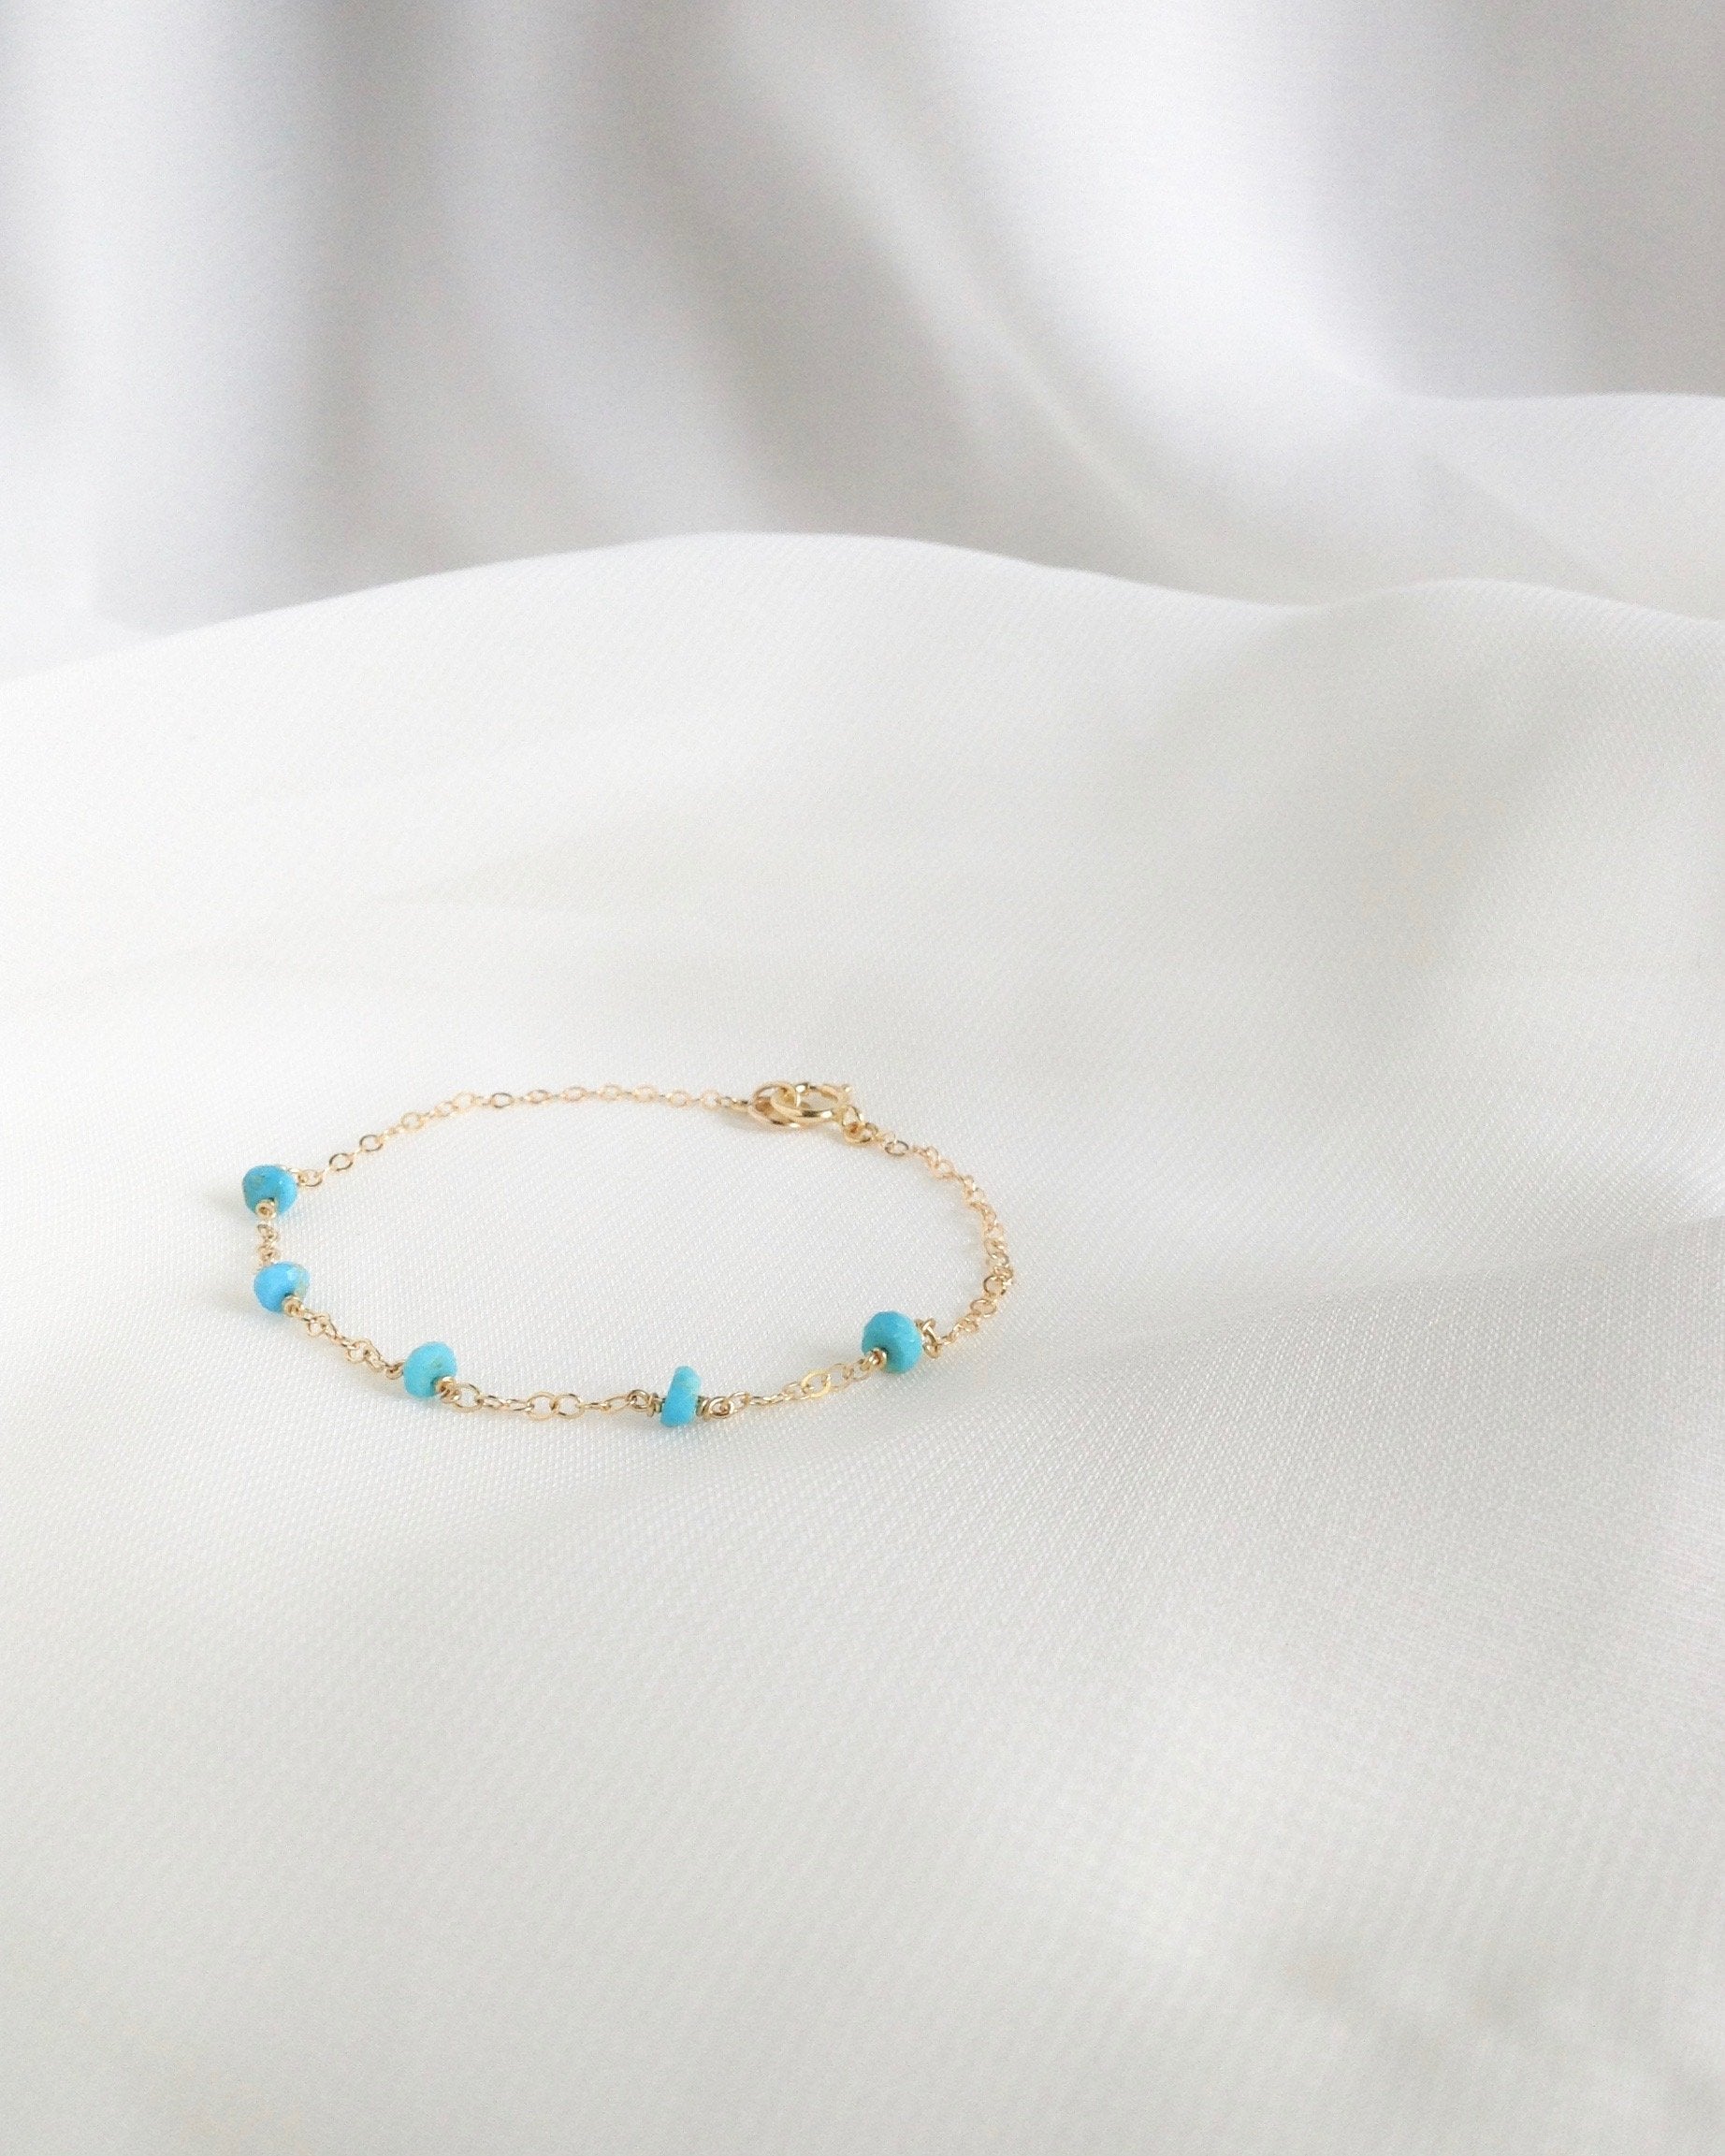 Real Turquoise Minimal Thin Chain Everyday Bracelet | Dainty Bracelet | IB Jewelry